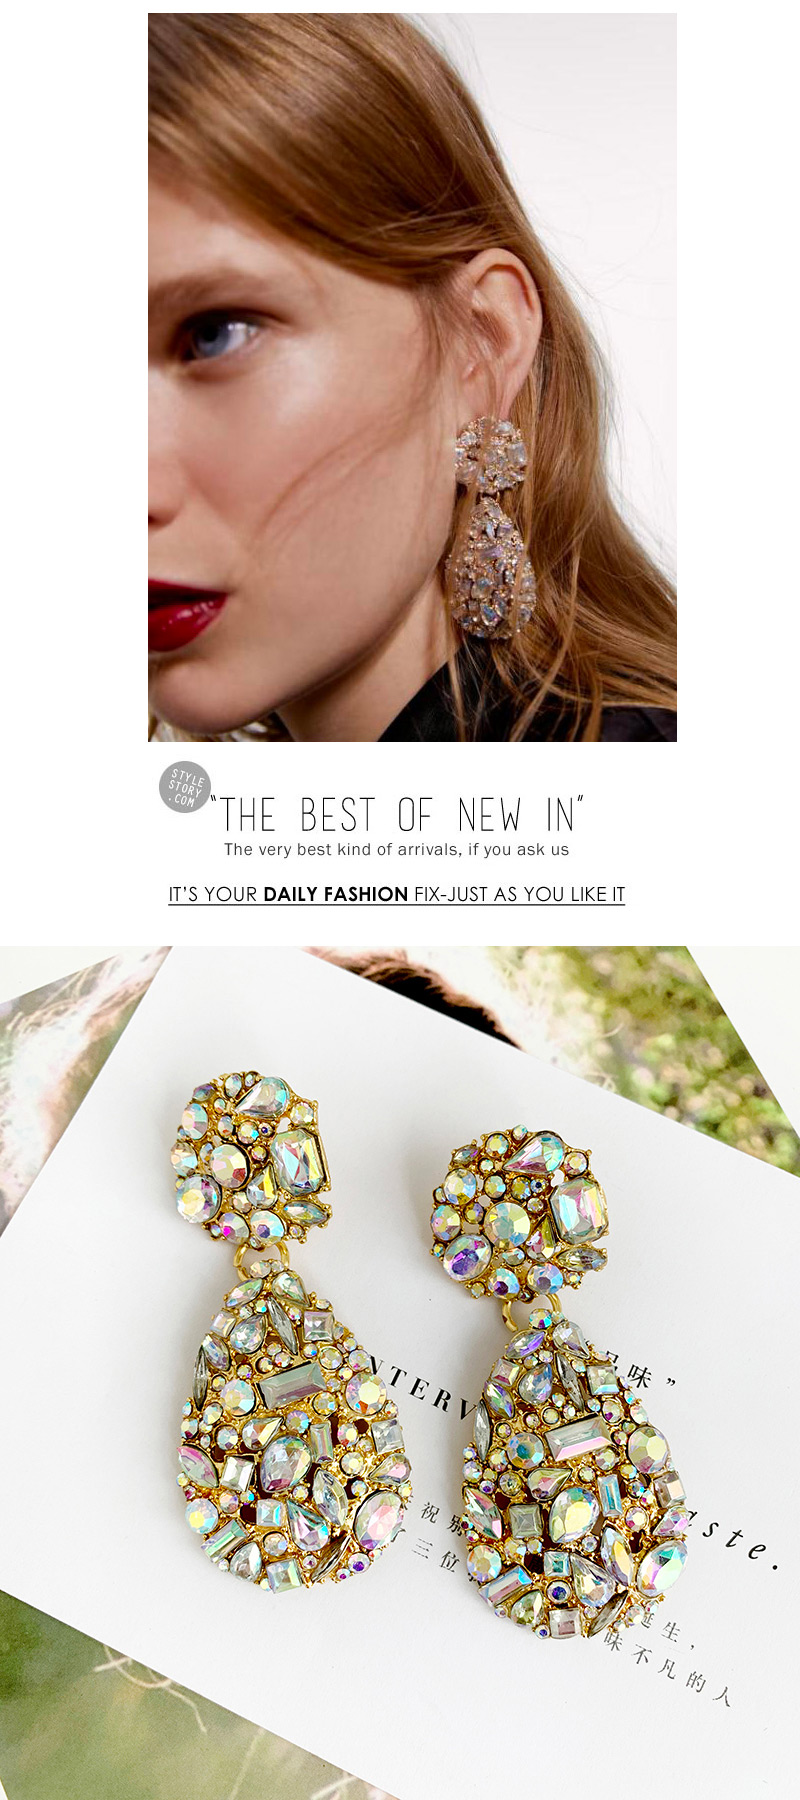 Fashion Ab Color Alloy Diamond Drop Shape Earrings,Drop Earrings